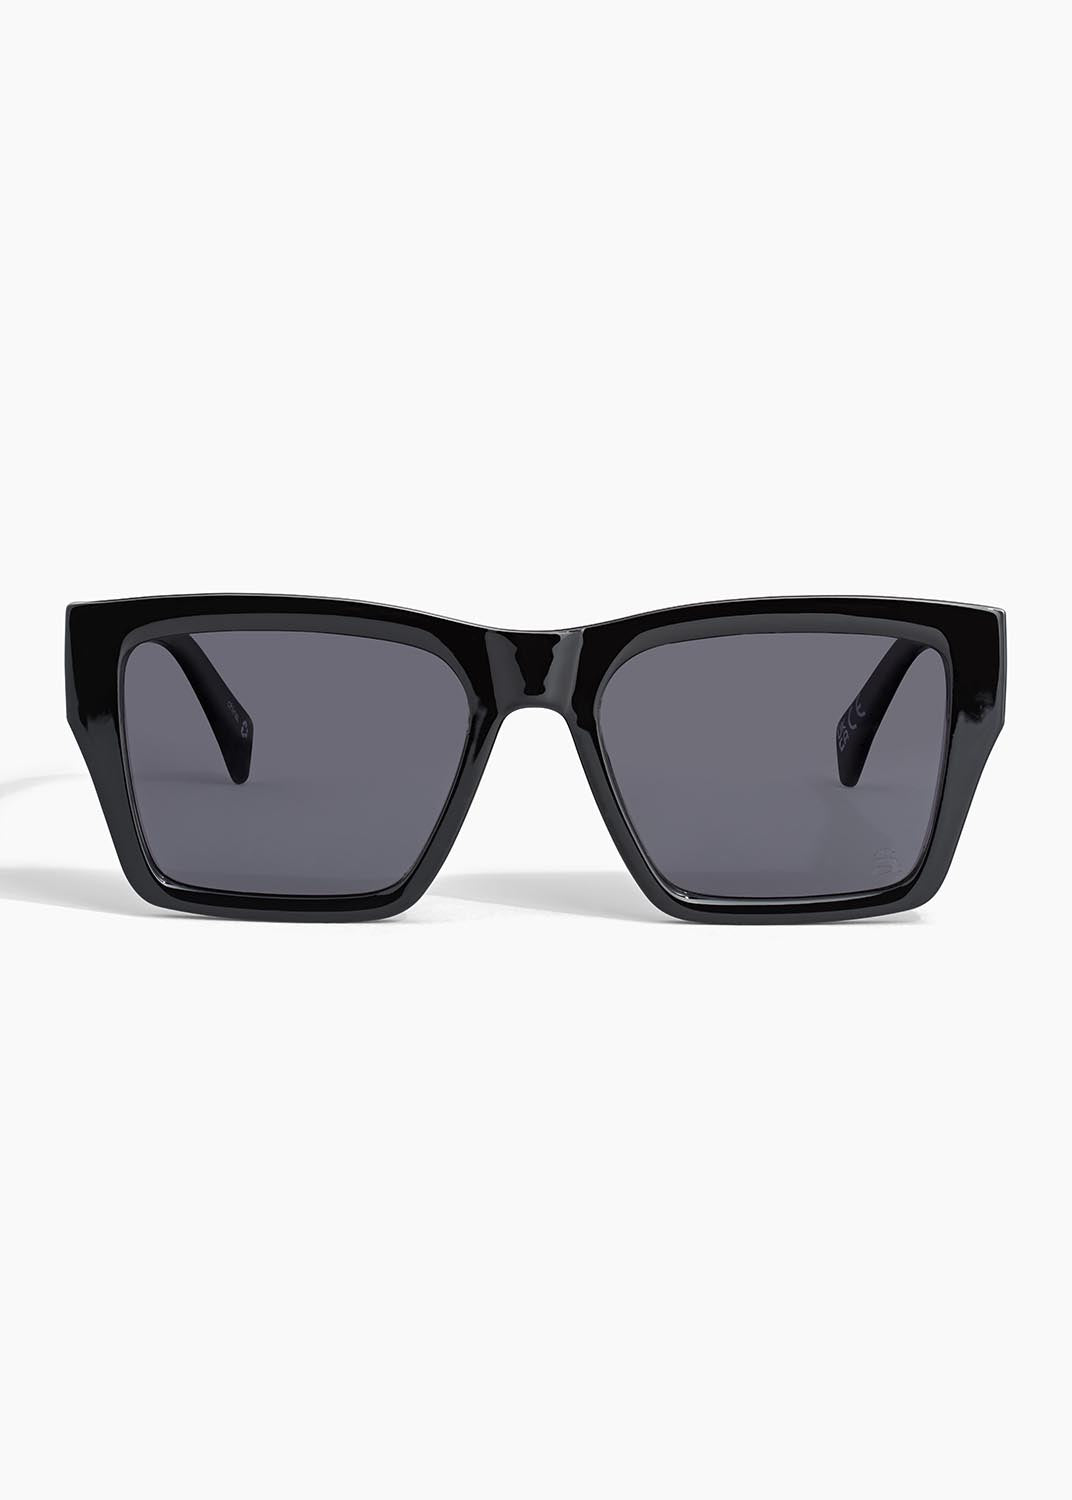 SHARP Sunglasses